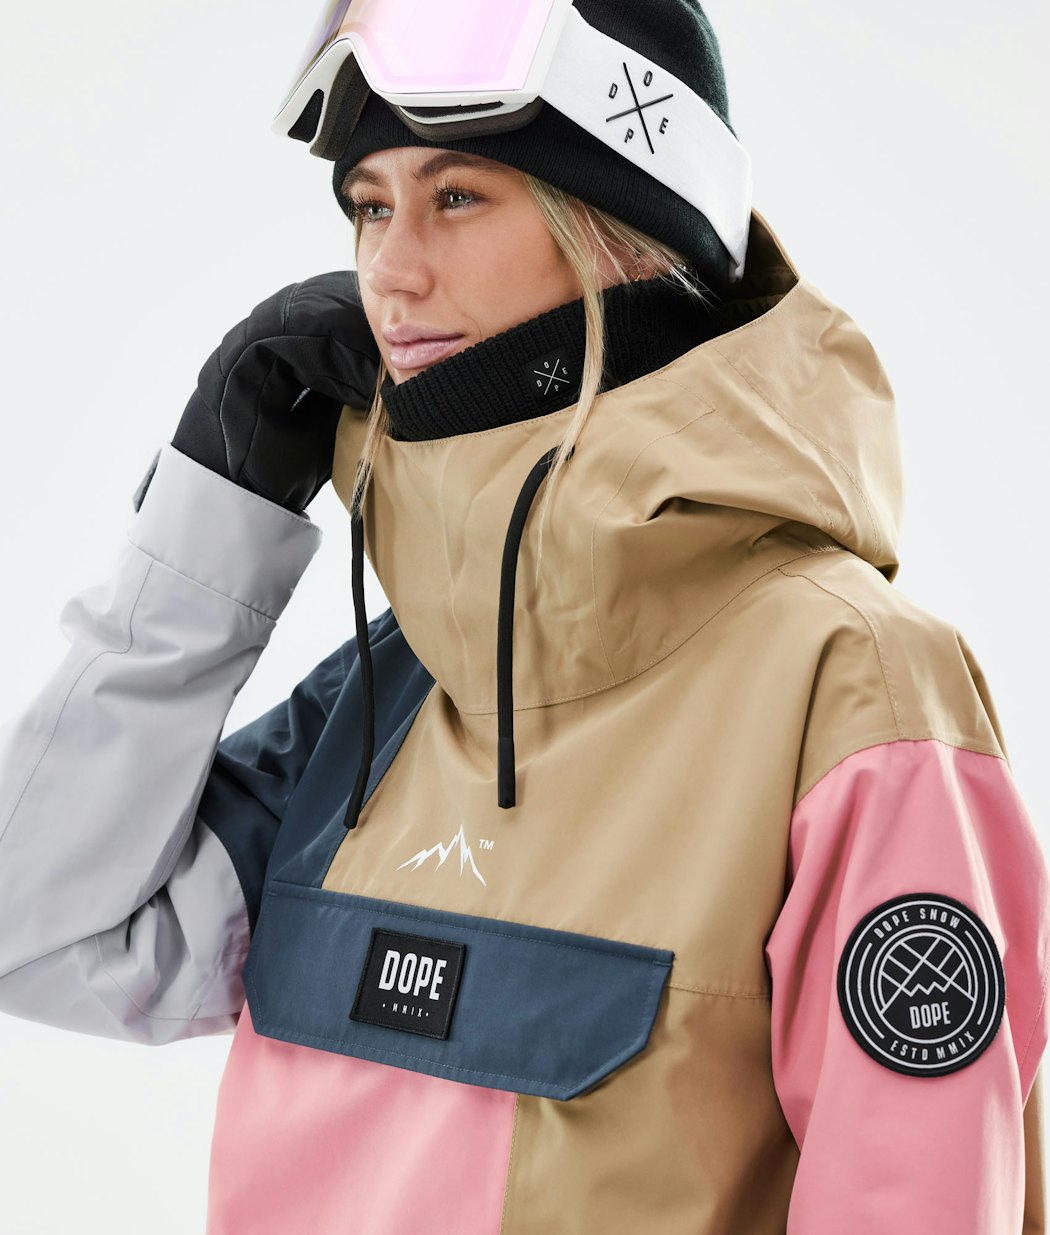 Dope Blizzard W Women's Snowboard Jacket Limited Edition Patchwork Khaki